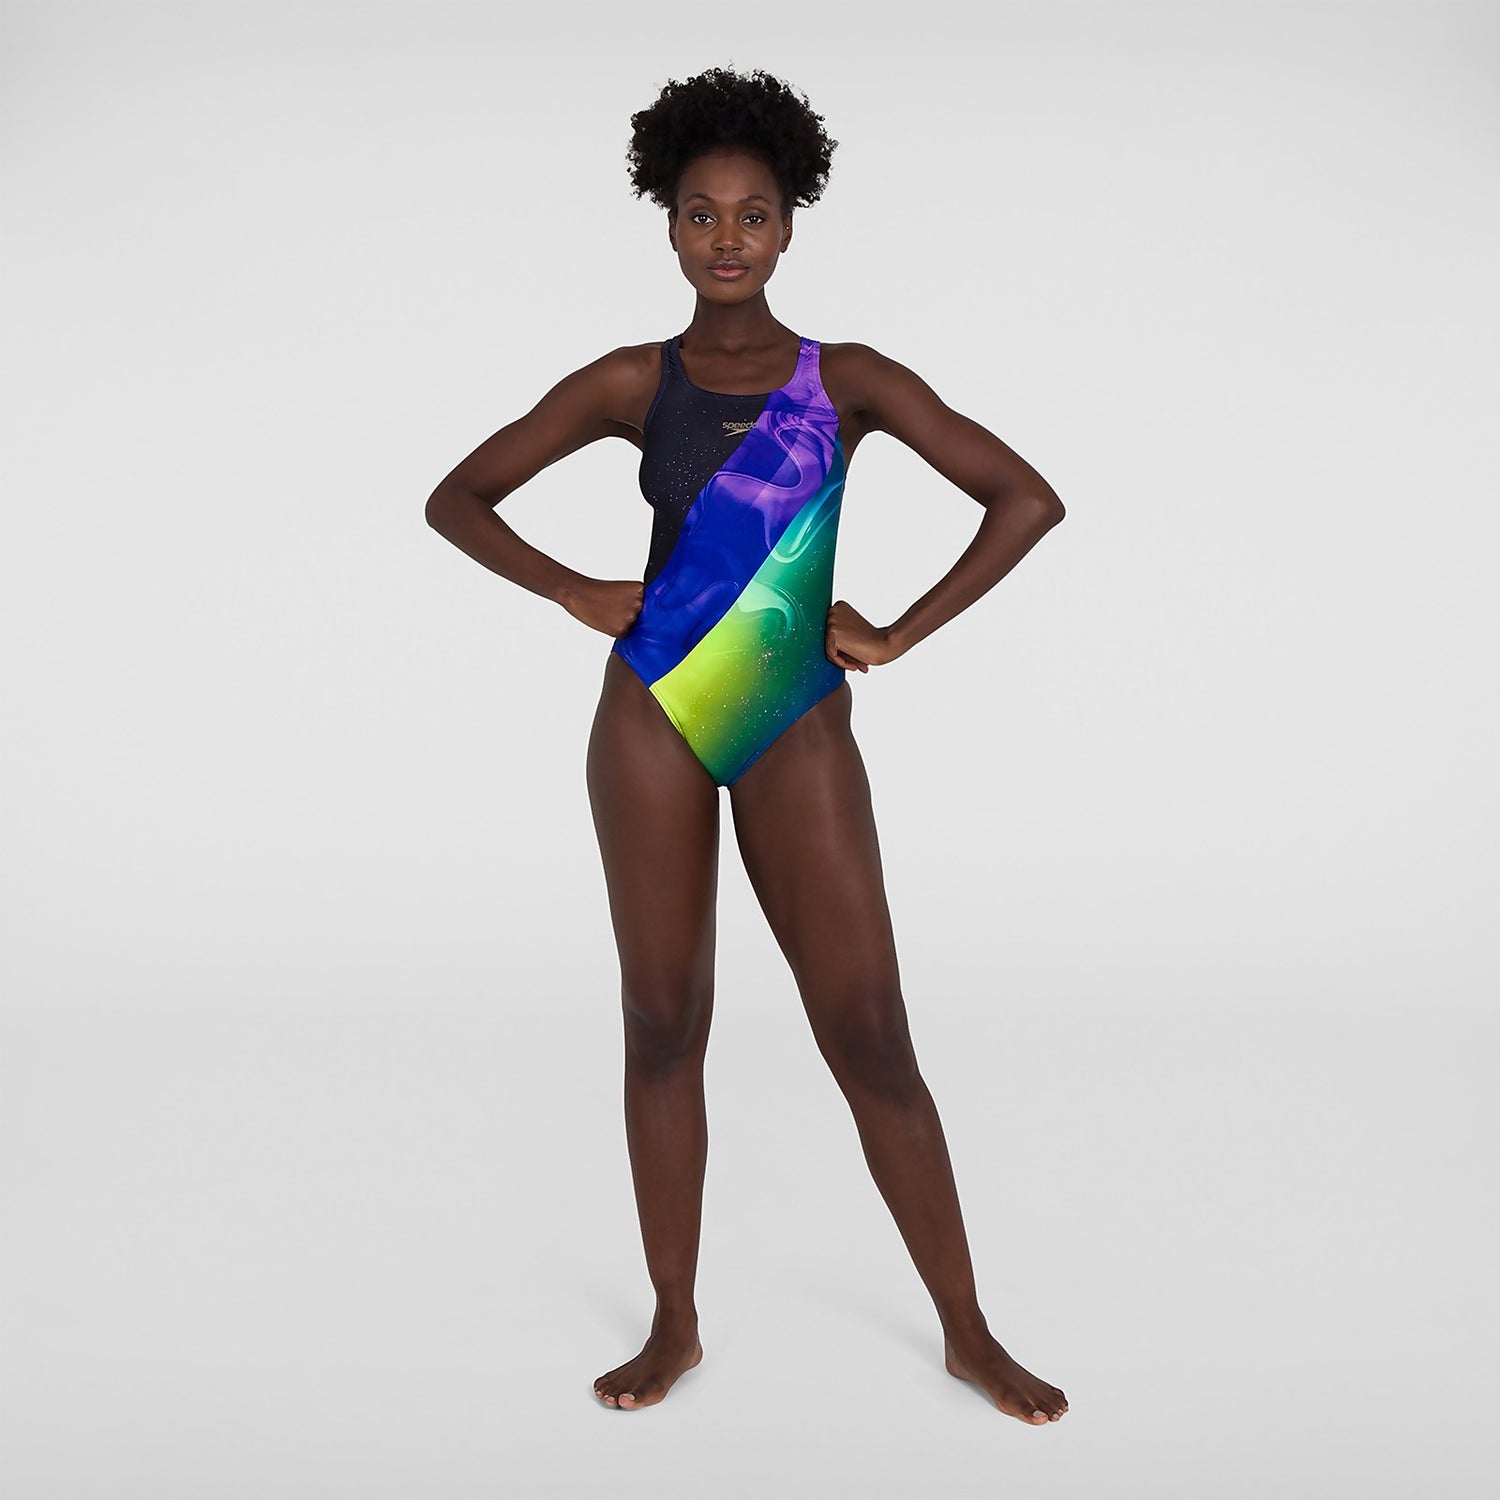 Speedo Women's Placement Digital Medalist Swimsuit